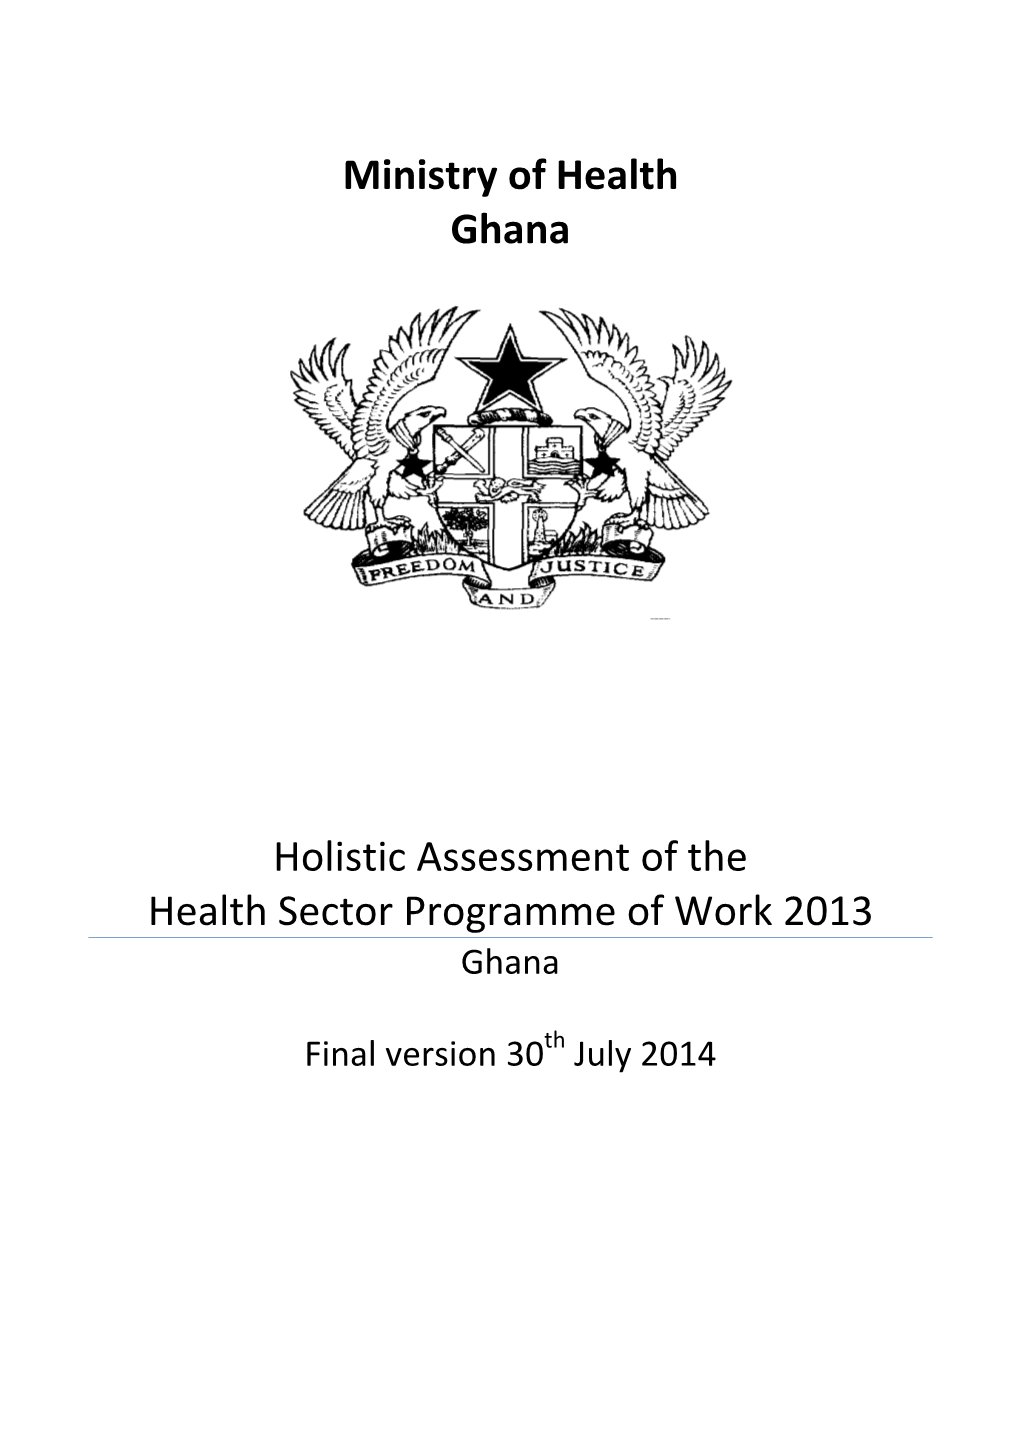 Holistic Assessment Report June 2014